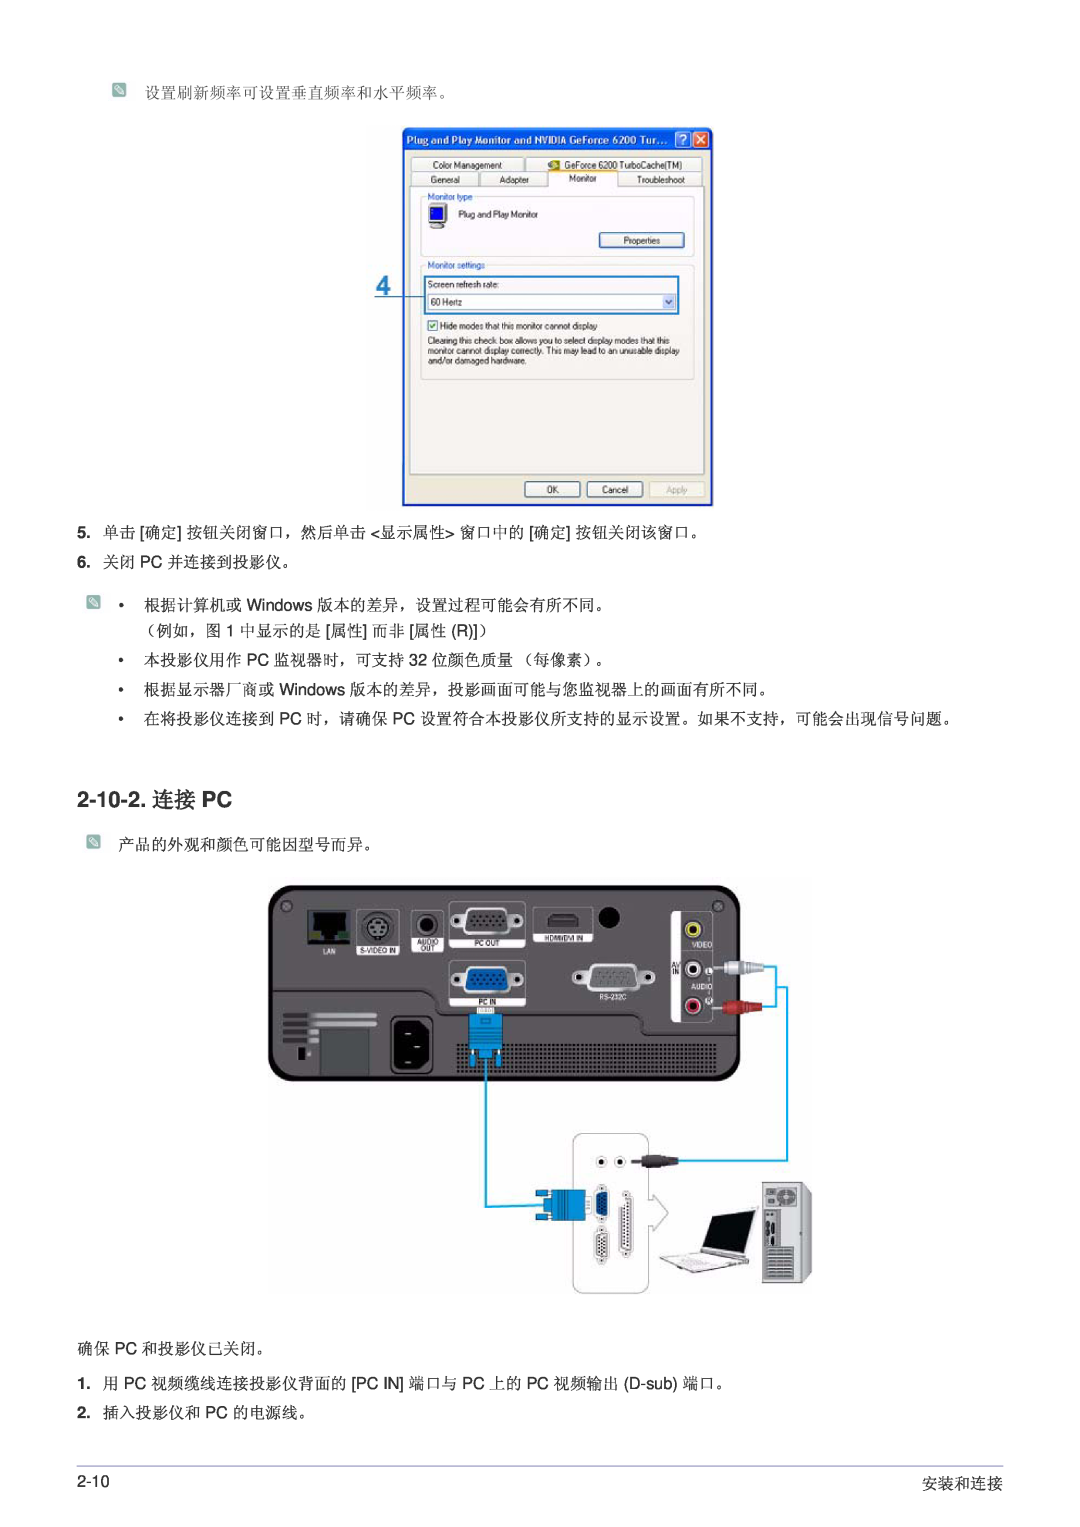 Samsung SP1055XWX/EN, SP1005XWX/EN manual 2-10-2. 连接 PC 